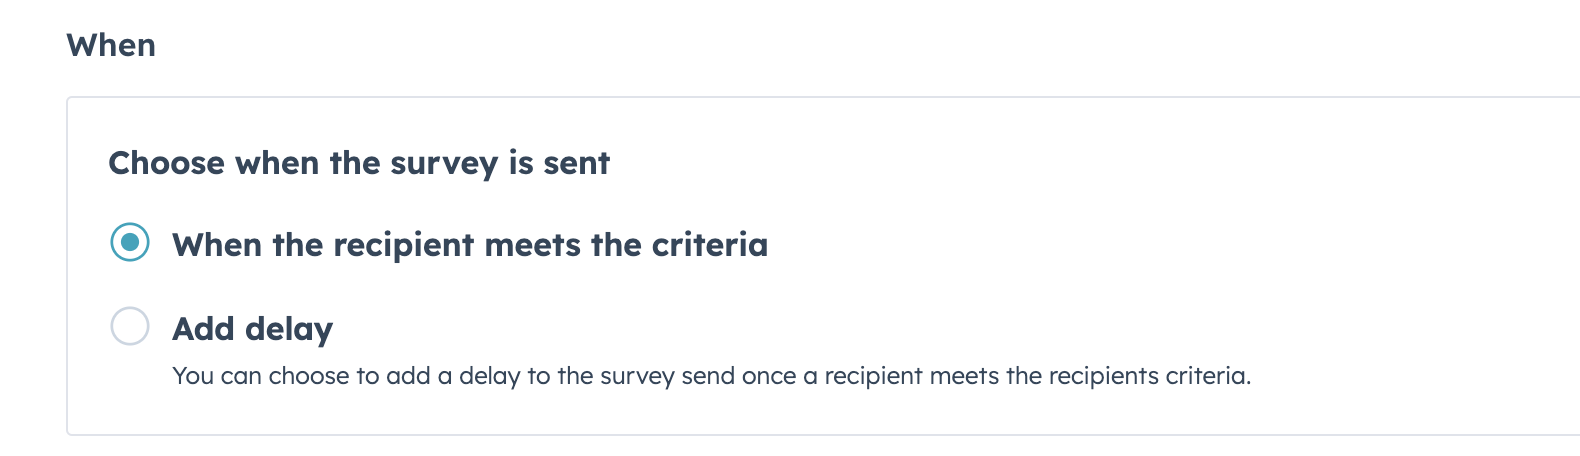 Survey options example